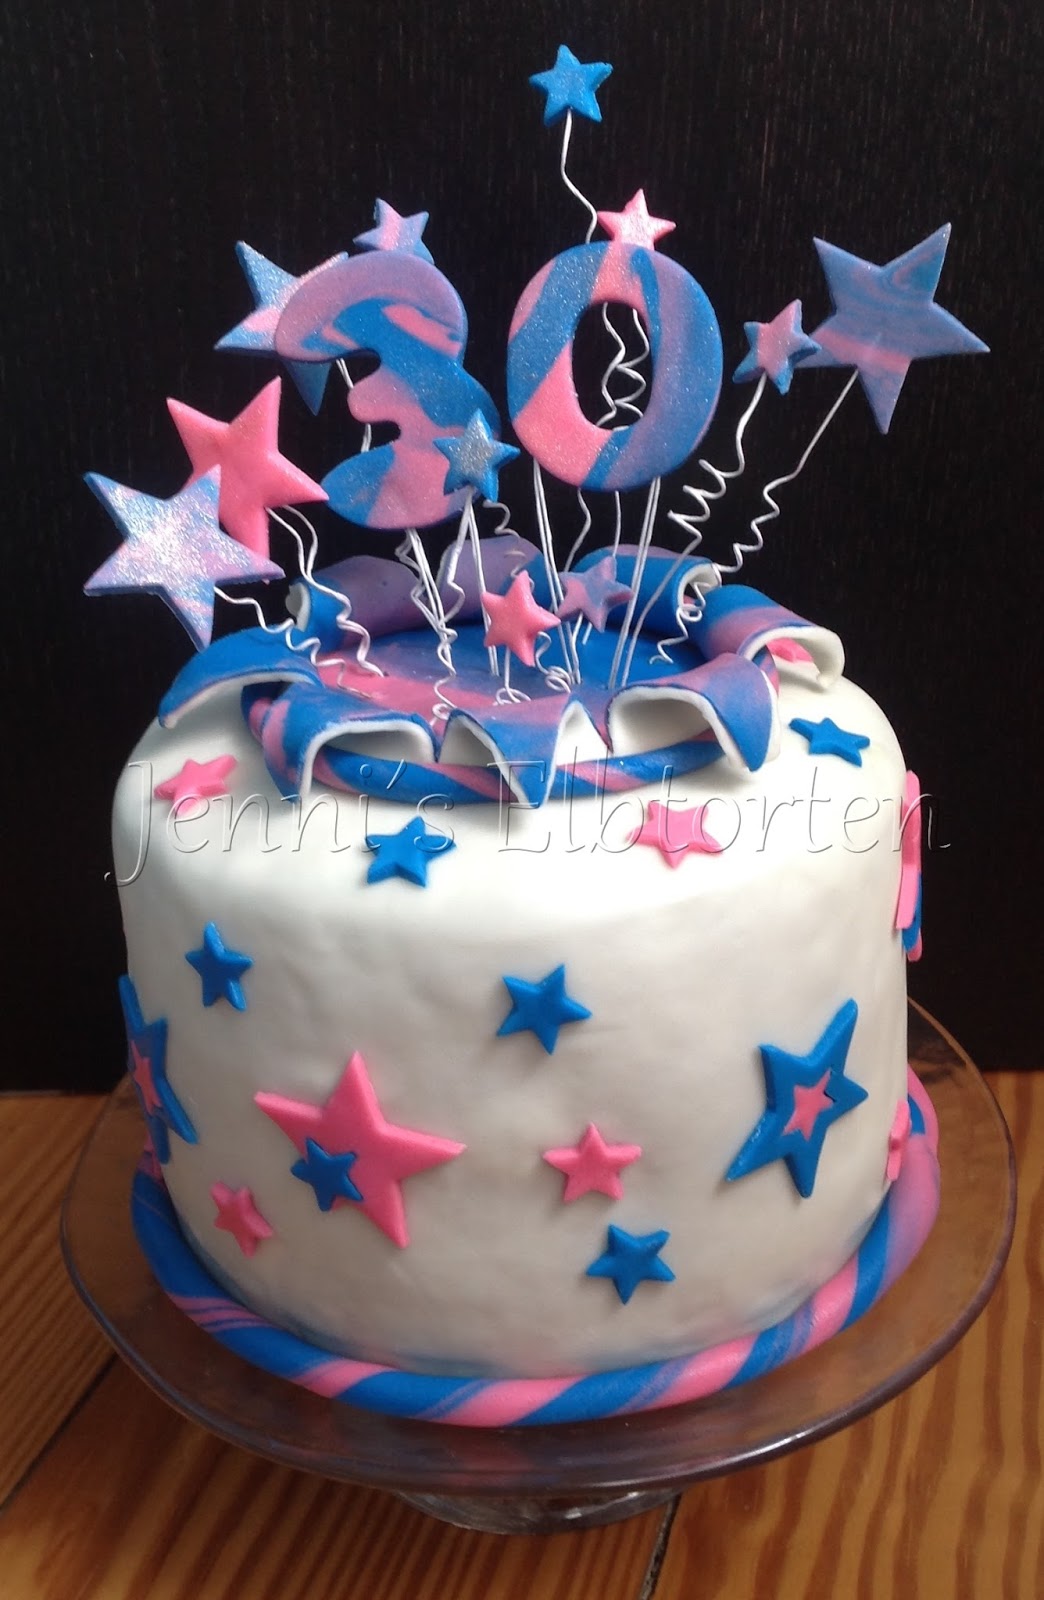 Jenni S Elbtorten Torte 30 Geburtstag Sterne Explosions Cake